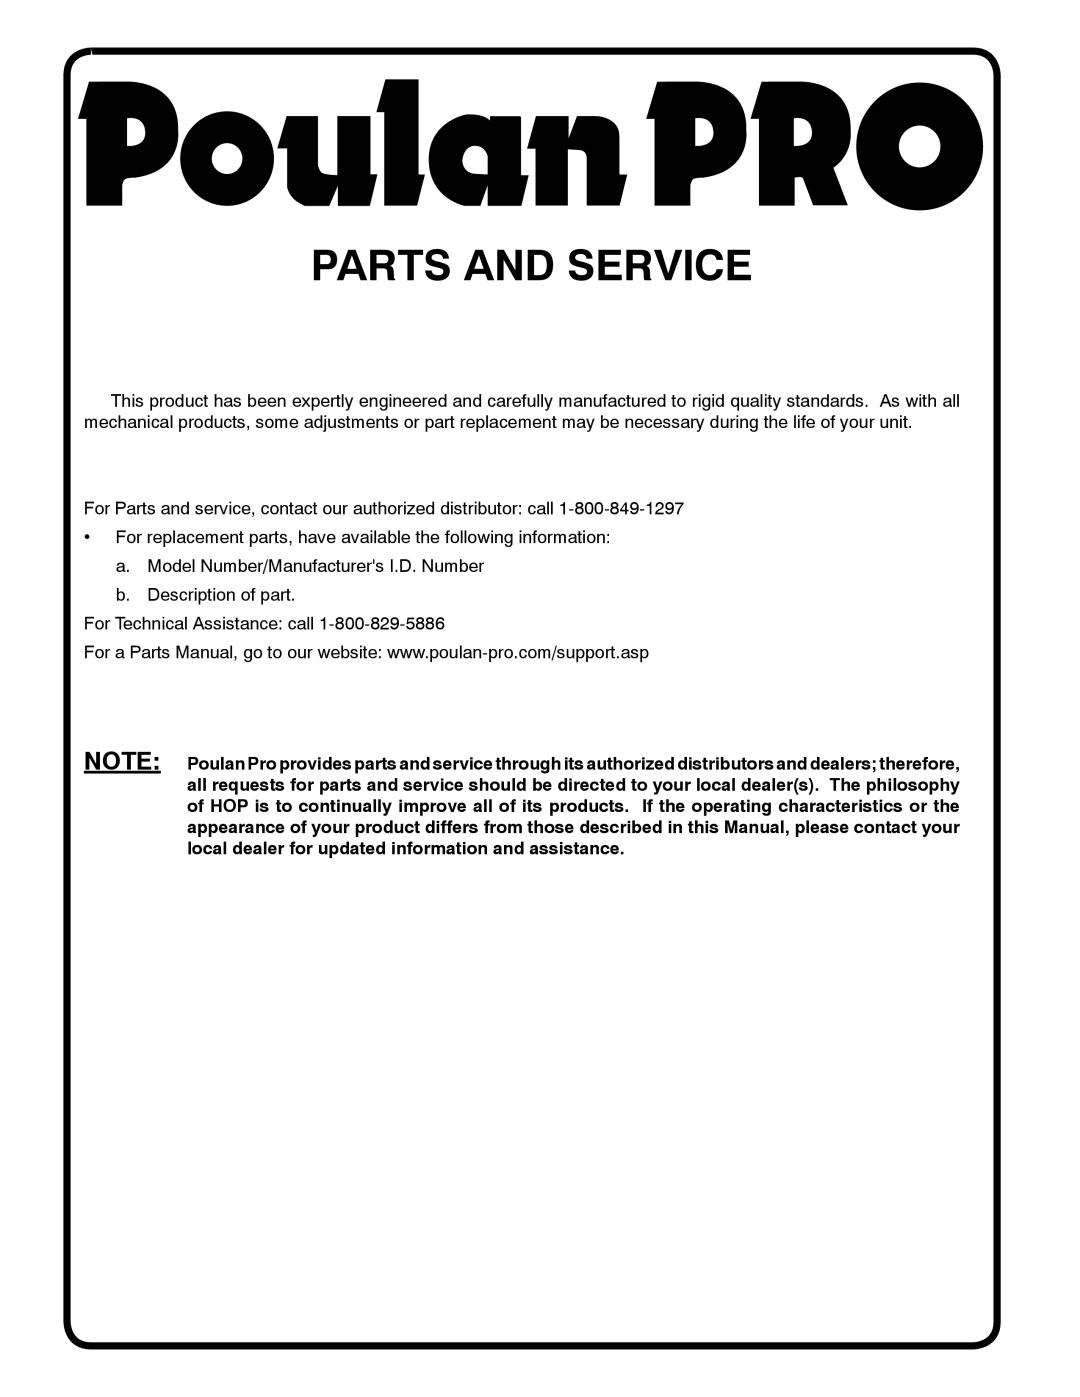 Poulan PRRT900 manual Parts And Service 